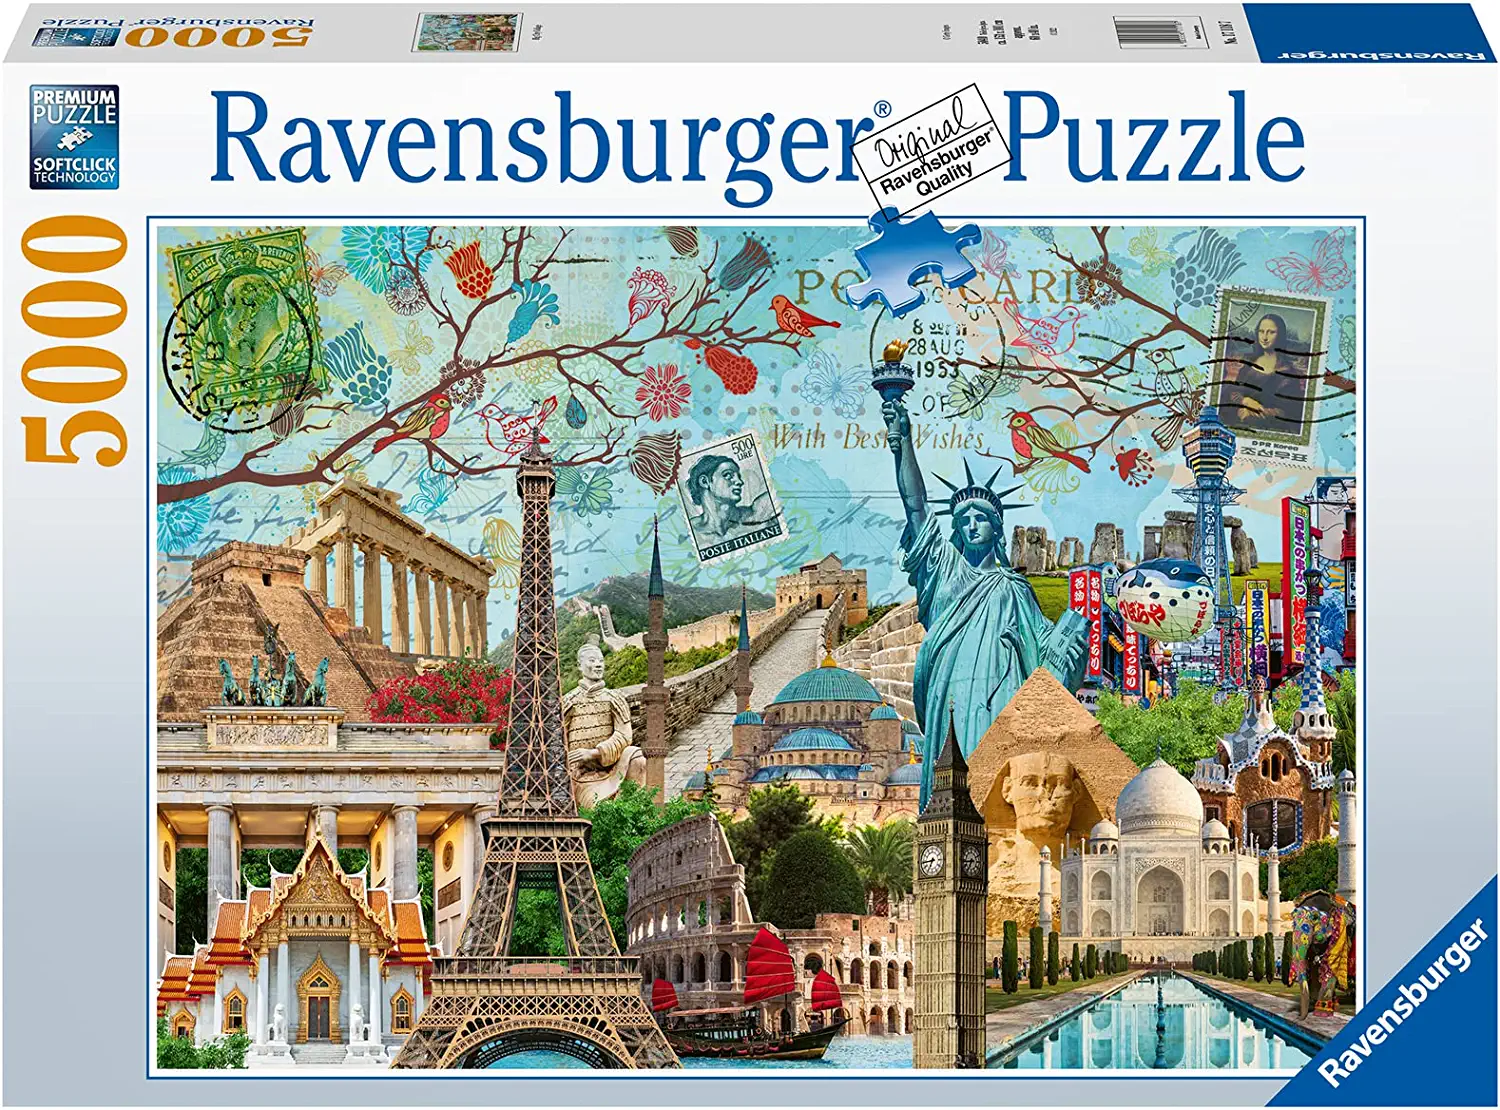 Ravensburger - Disney Multicharacter - 5000 Piece Jigsaw Puzzle